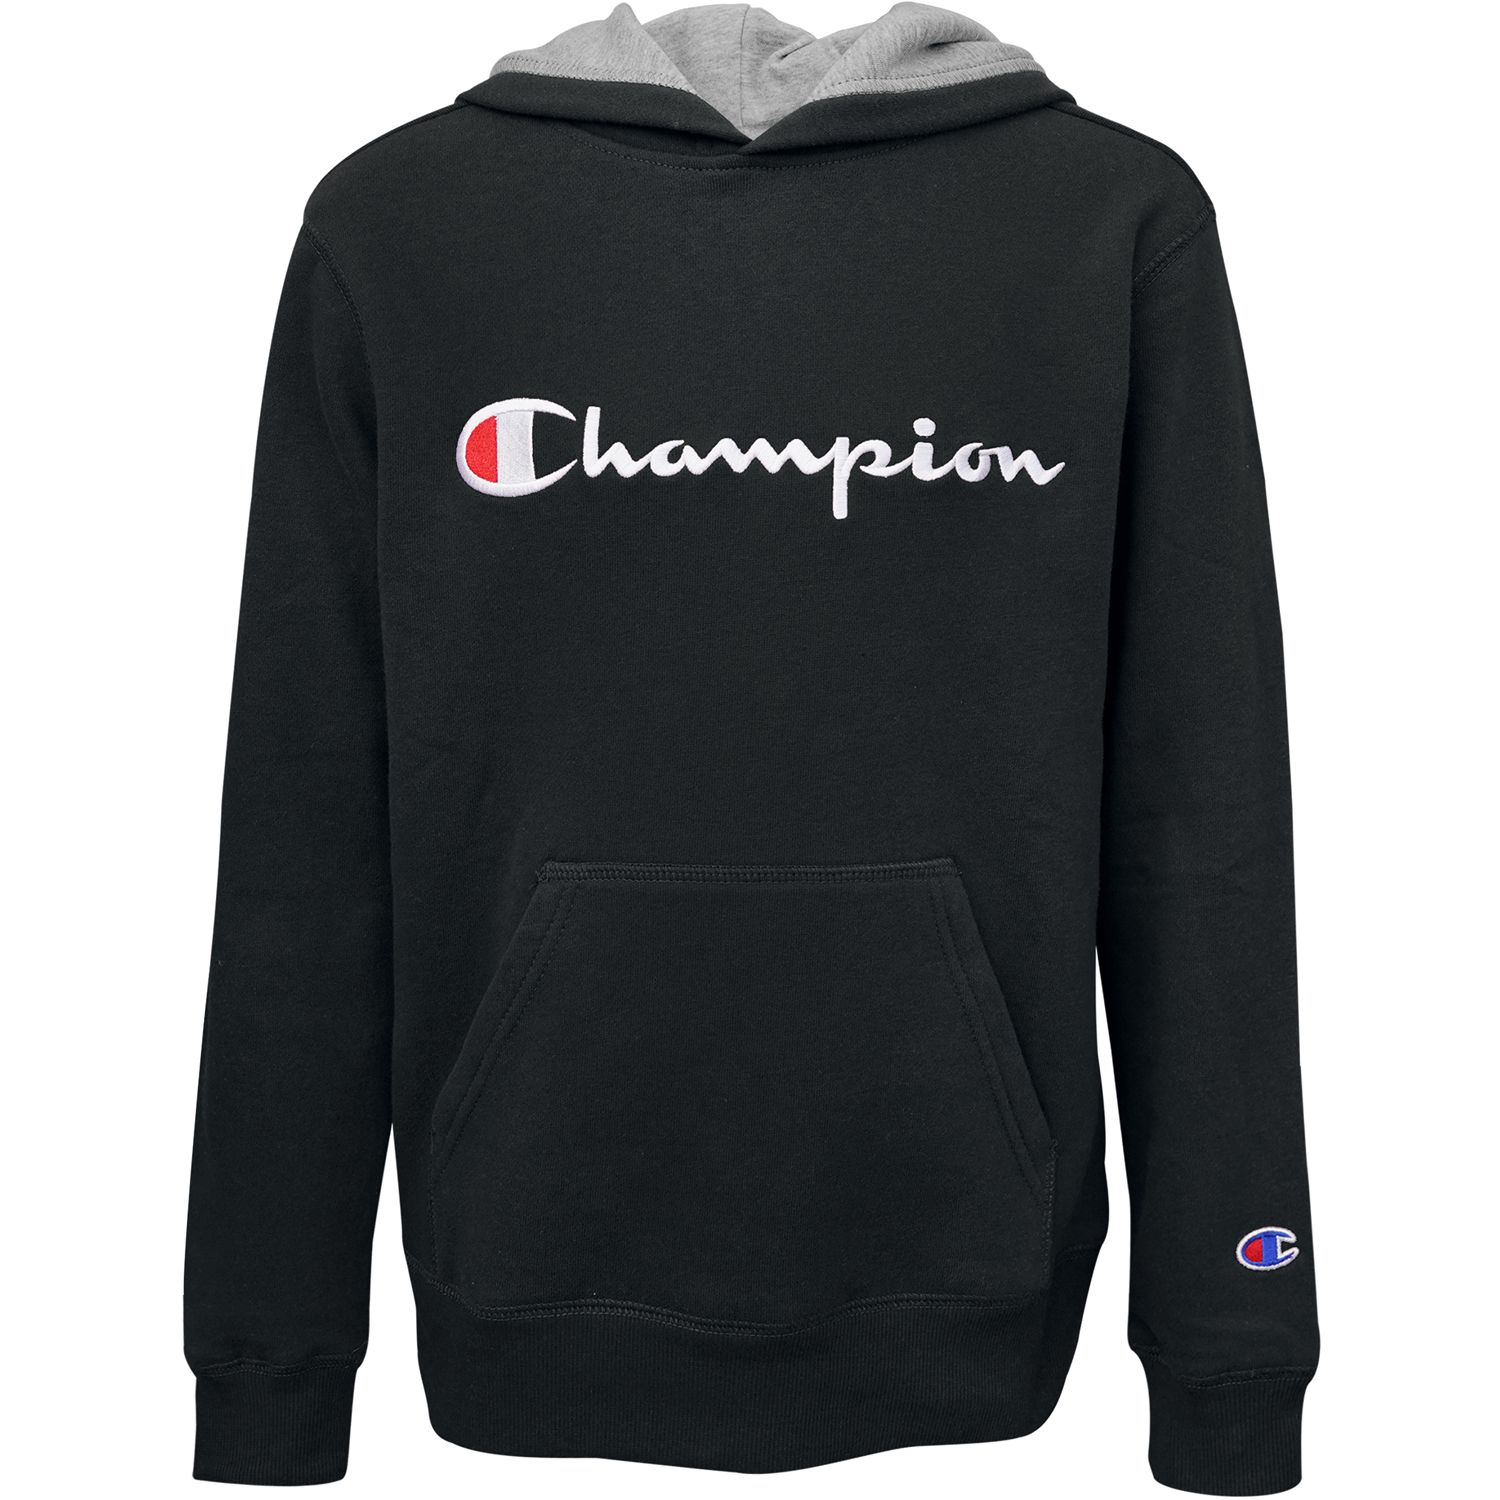 champion sweatshirt cost